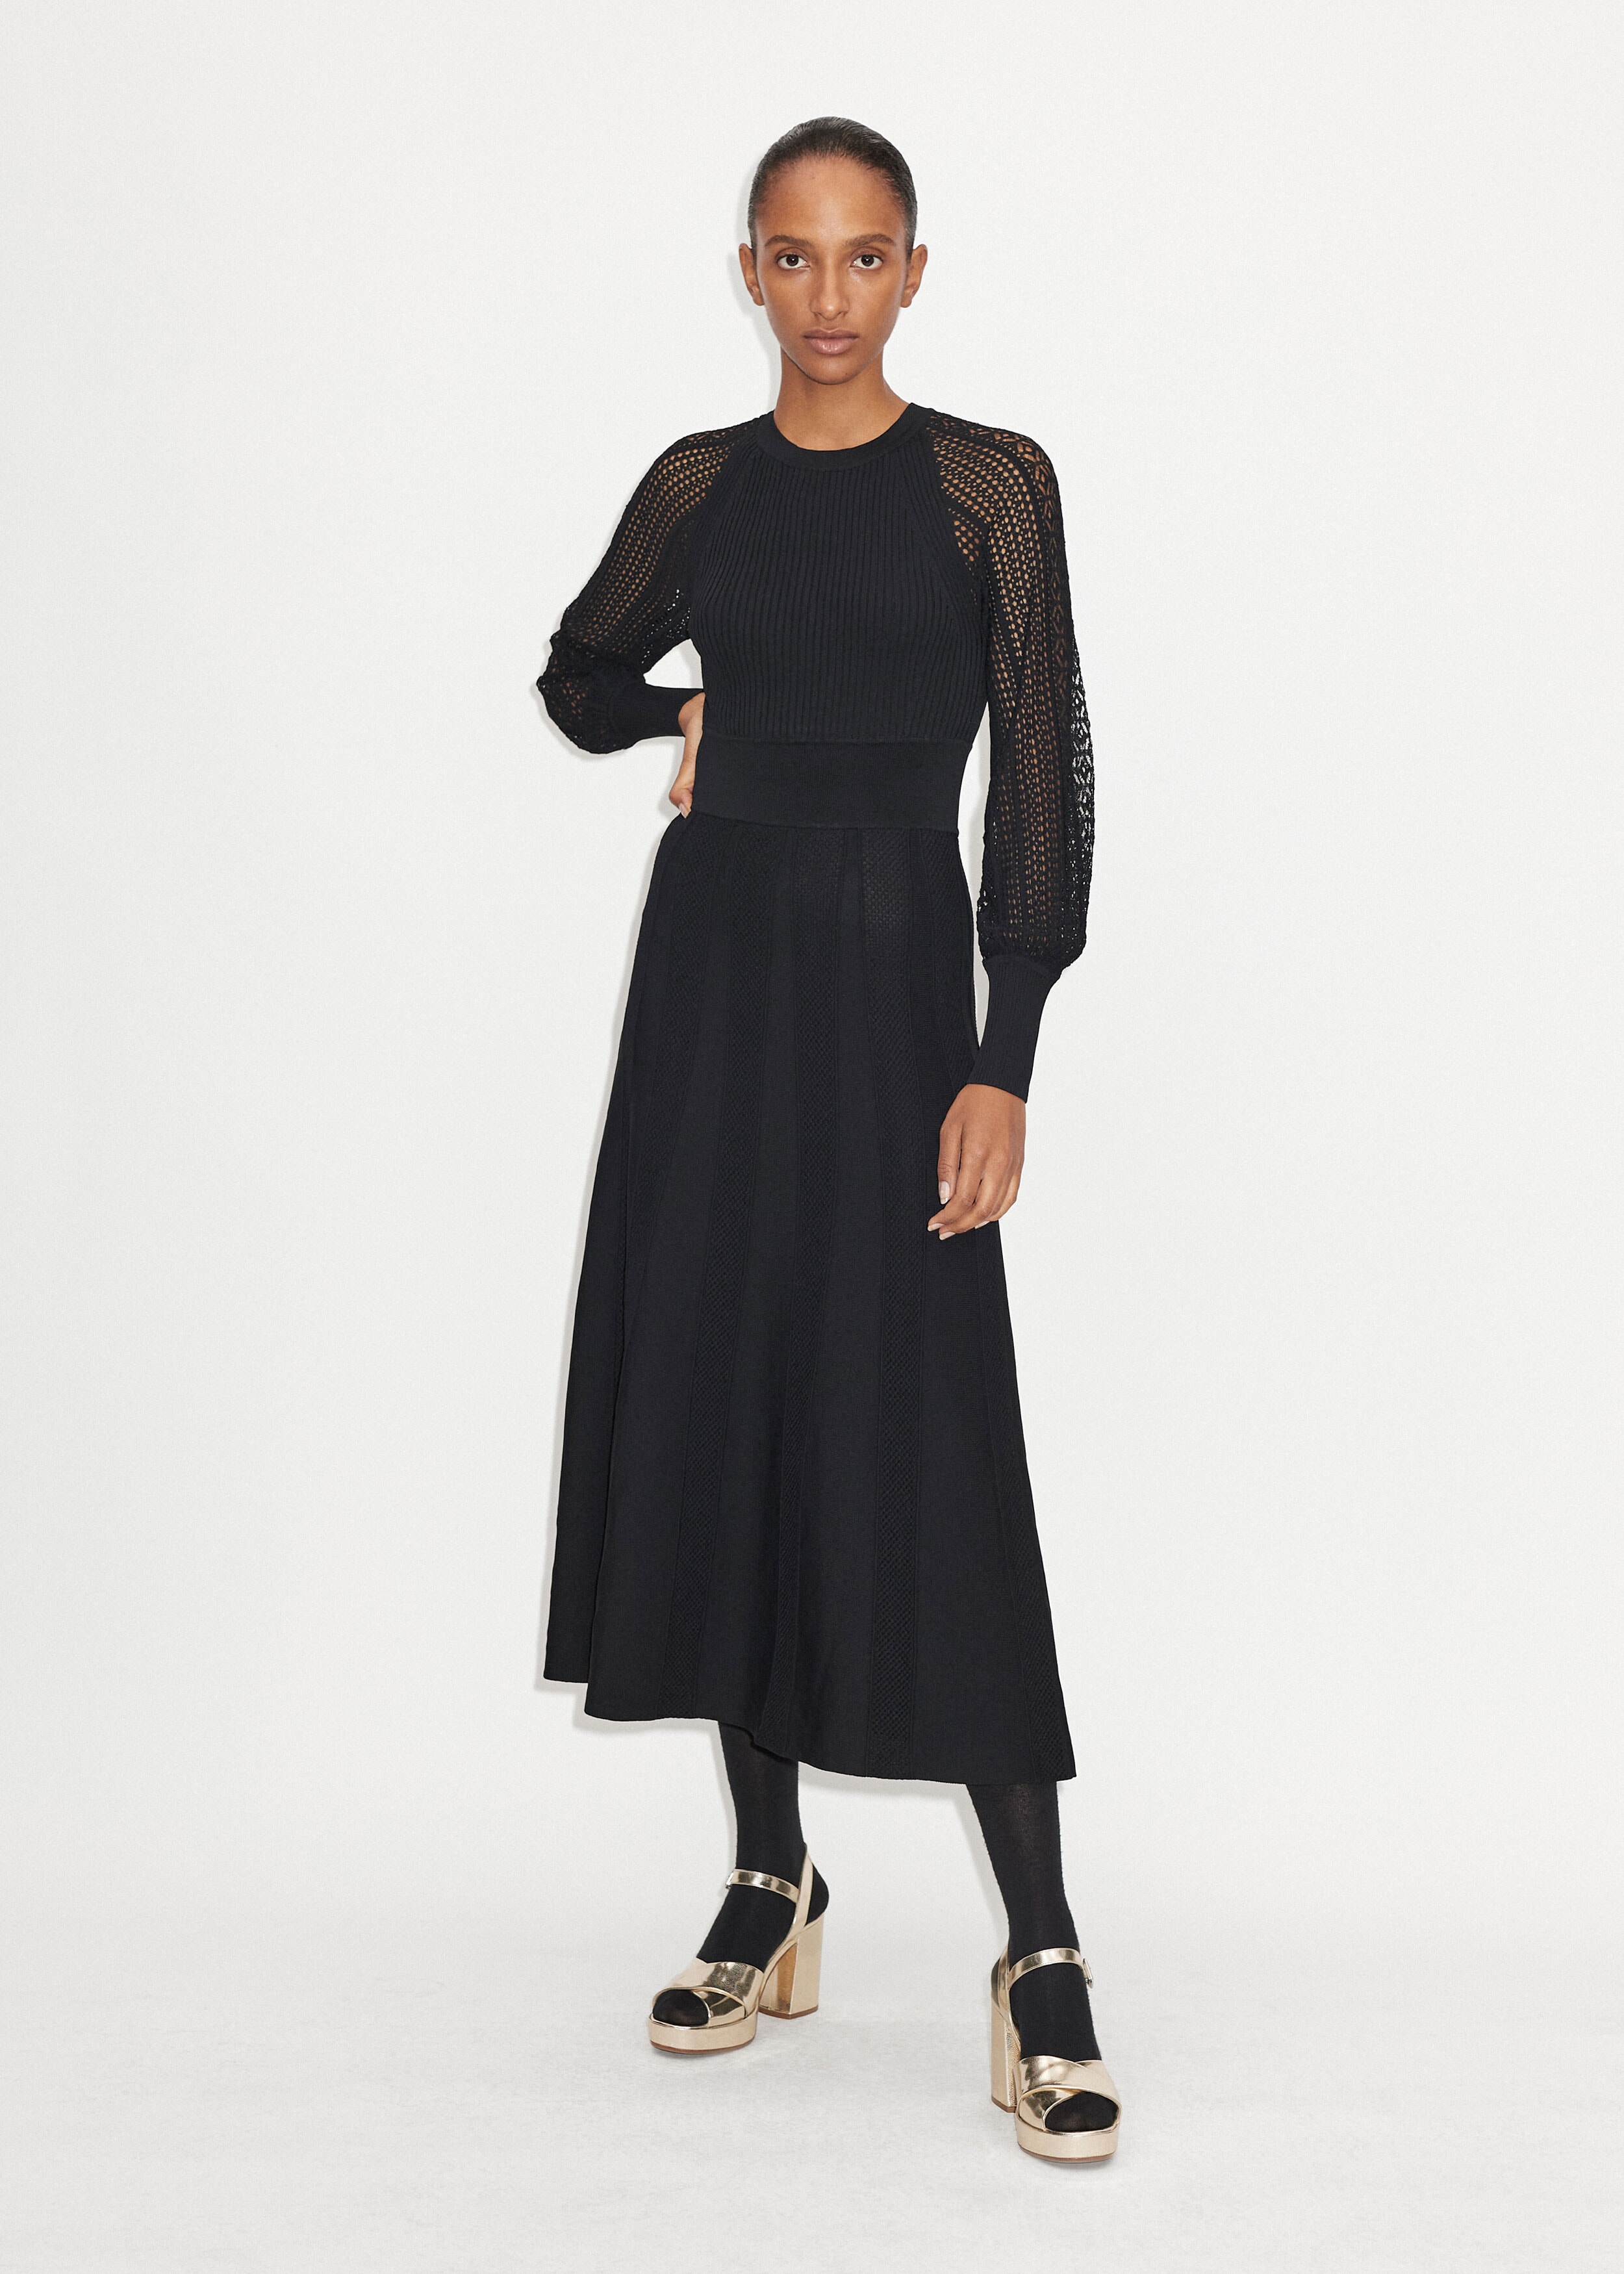 Lace Stitch Fit + Flare Knit Dress Black